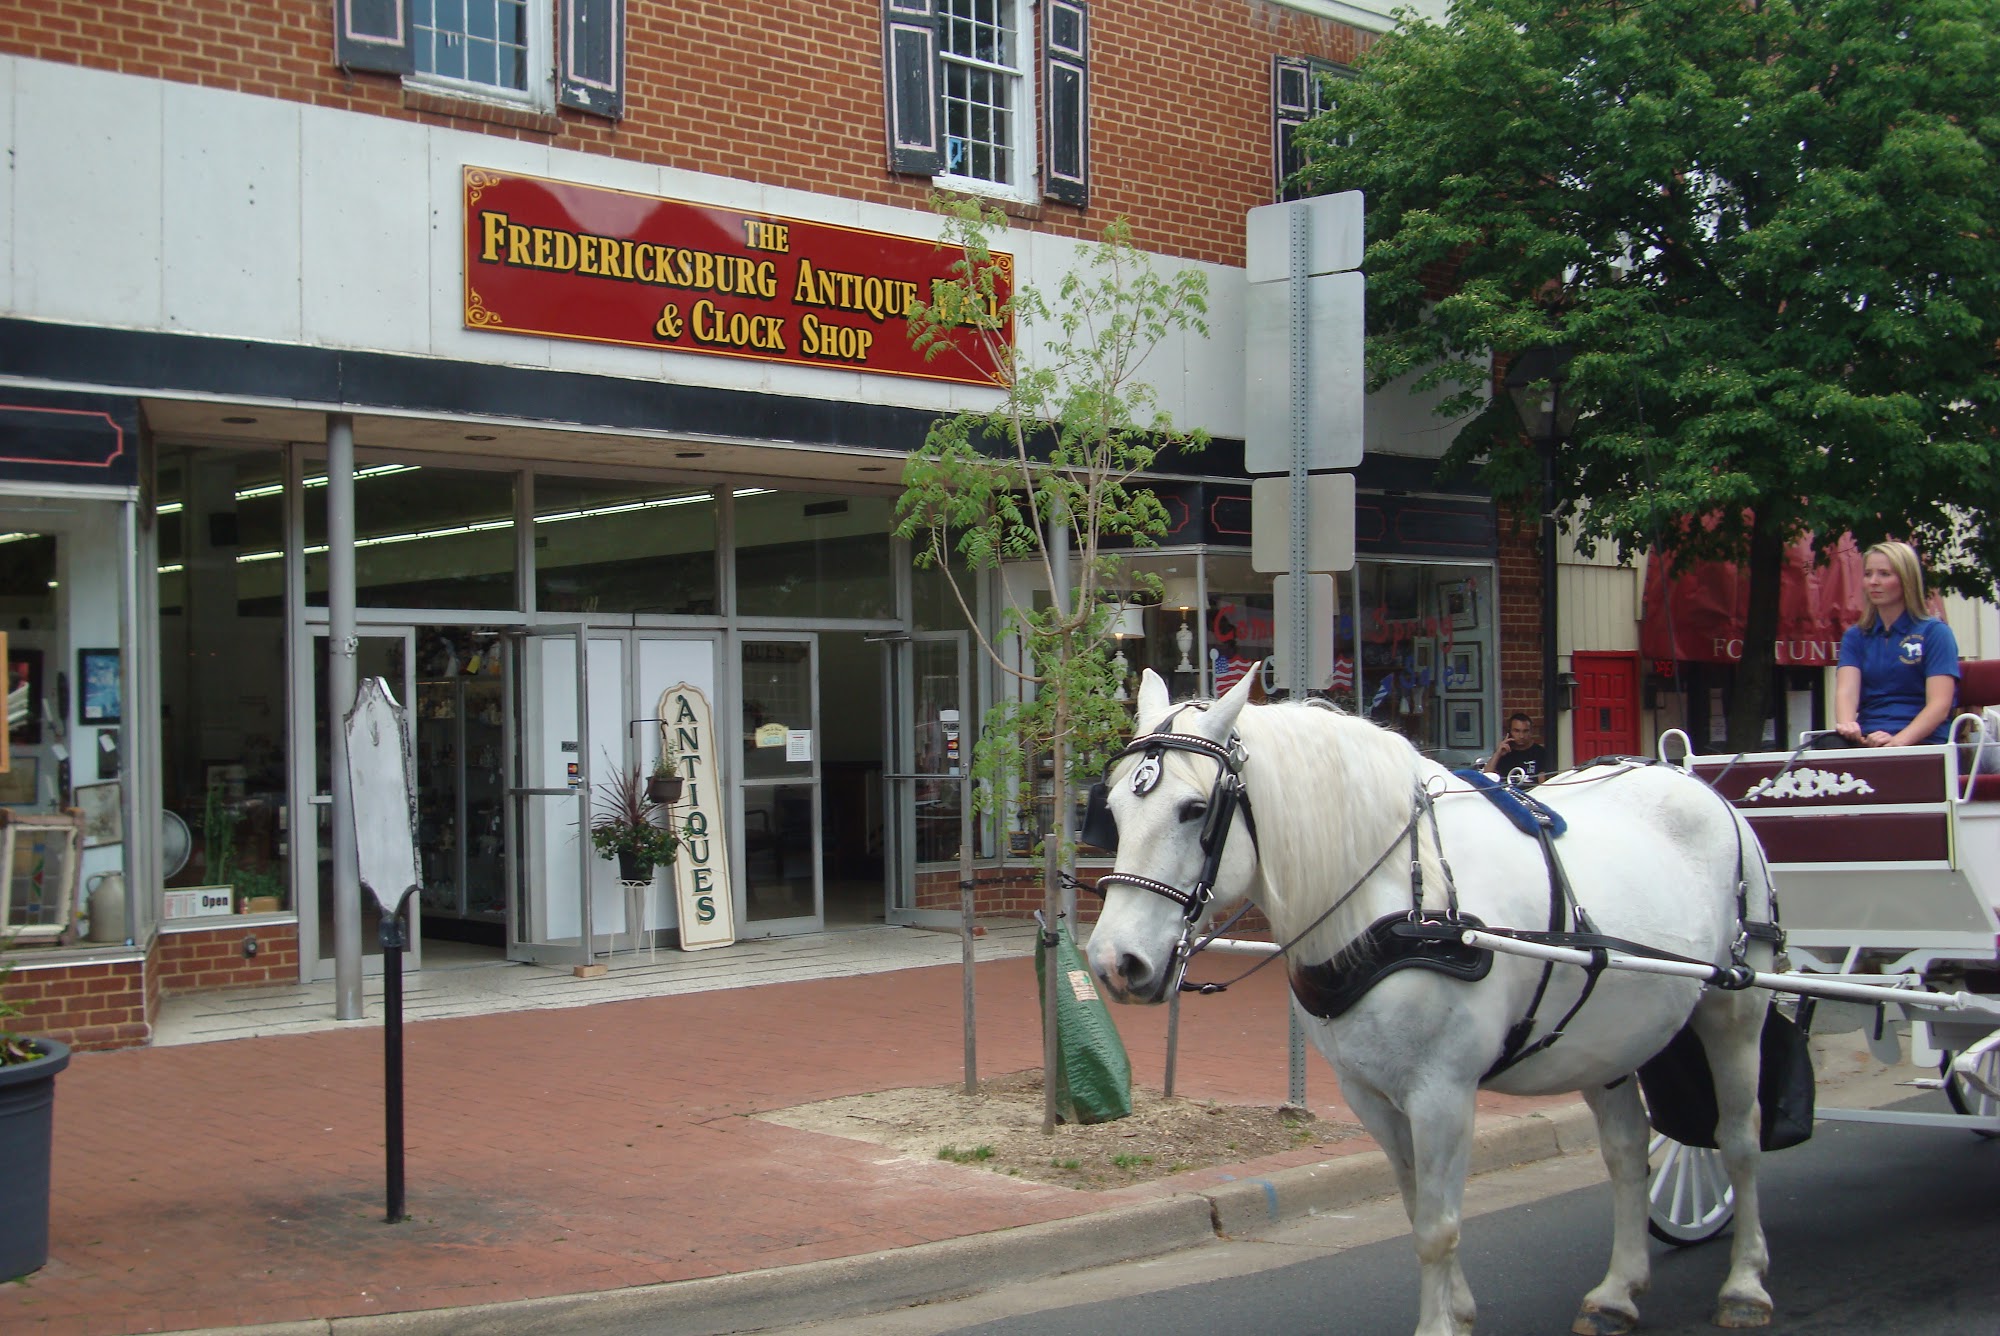 The Fredericksburg Antique Mall & Clock Shop